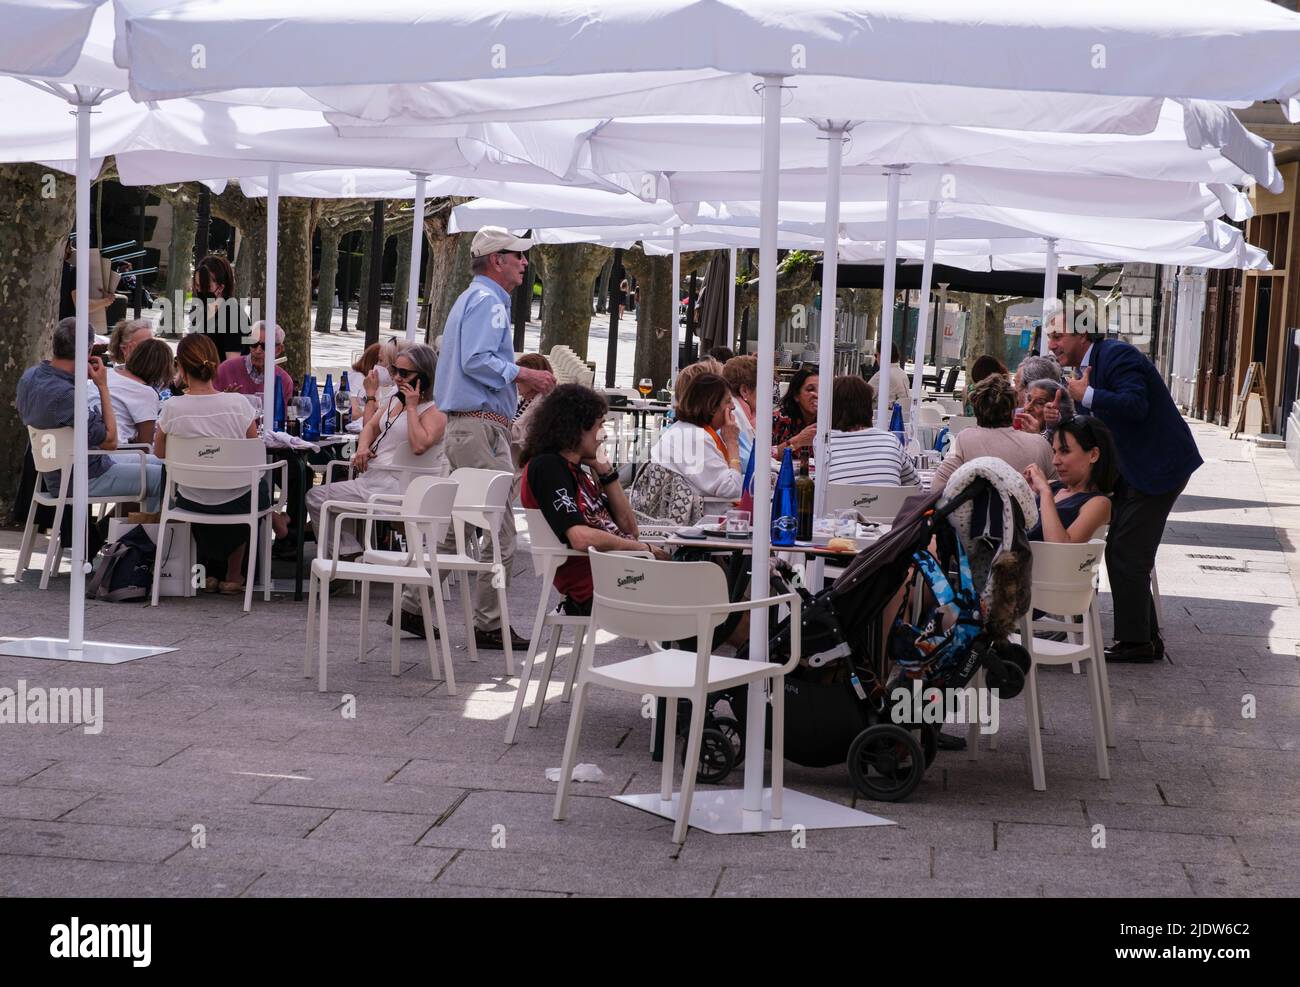 Spanien, Burgos. Straßenszene mit Sidewalk Cafe. Stockfoto